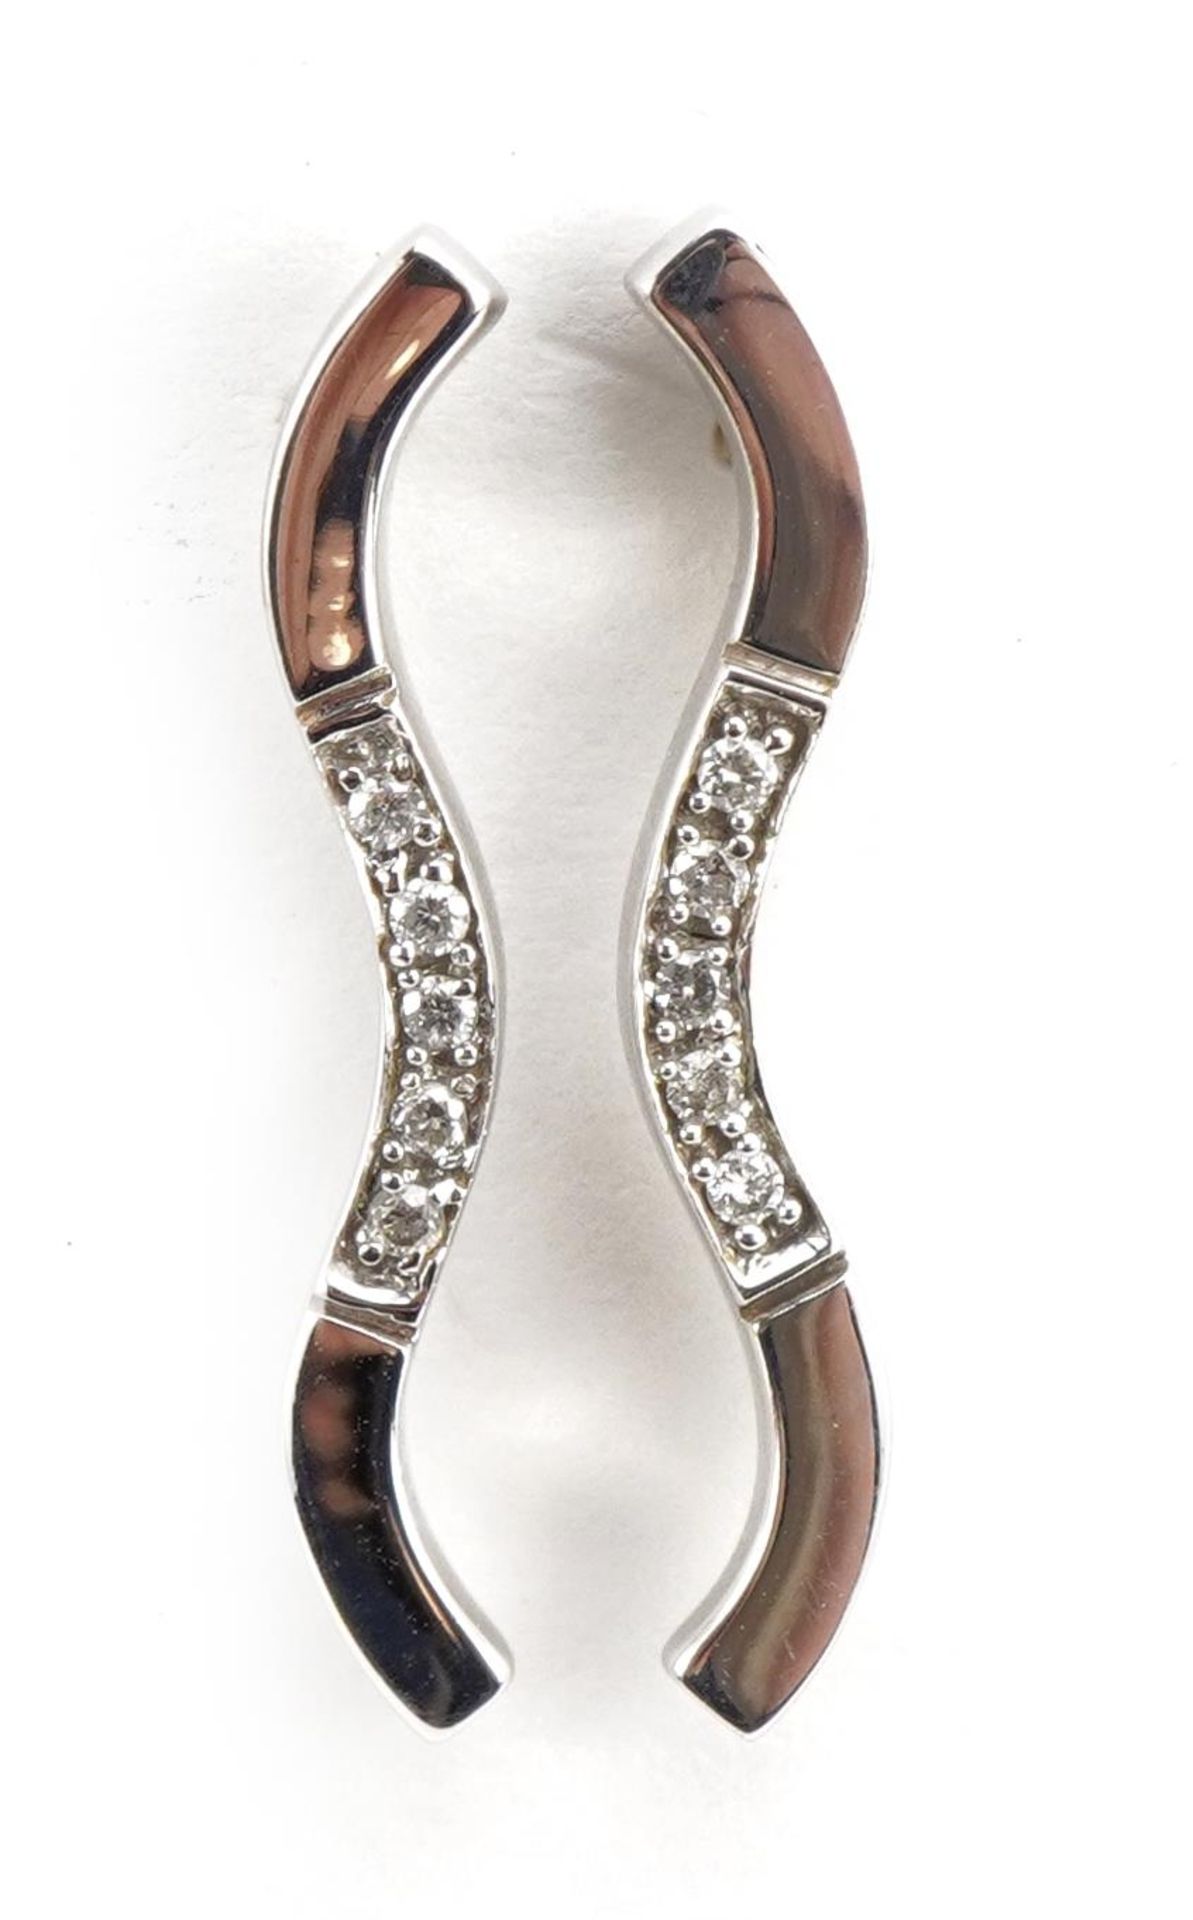 Pair of 9ct white gold diamond drop earrings, 2.1cm high, 1.4g